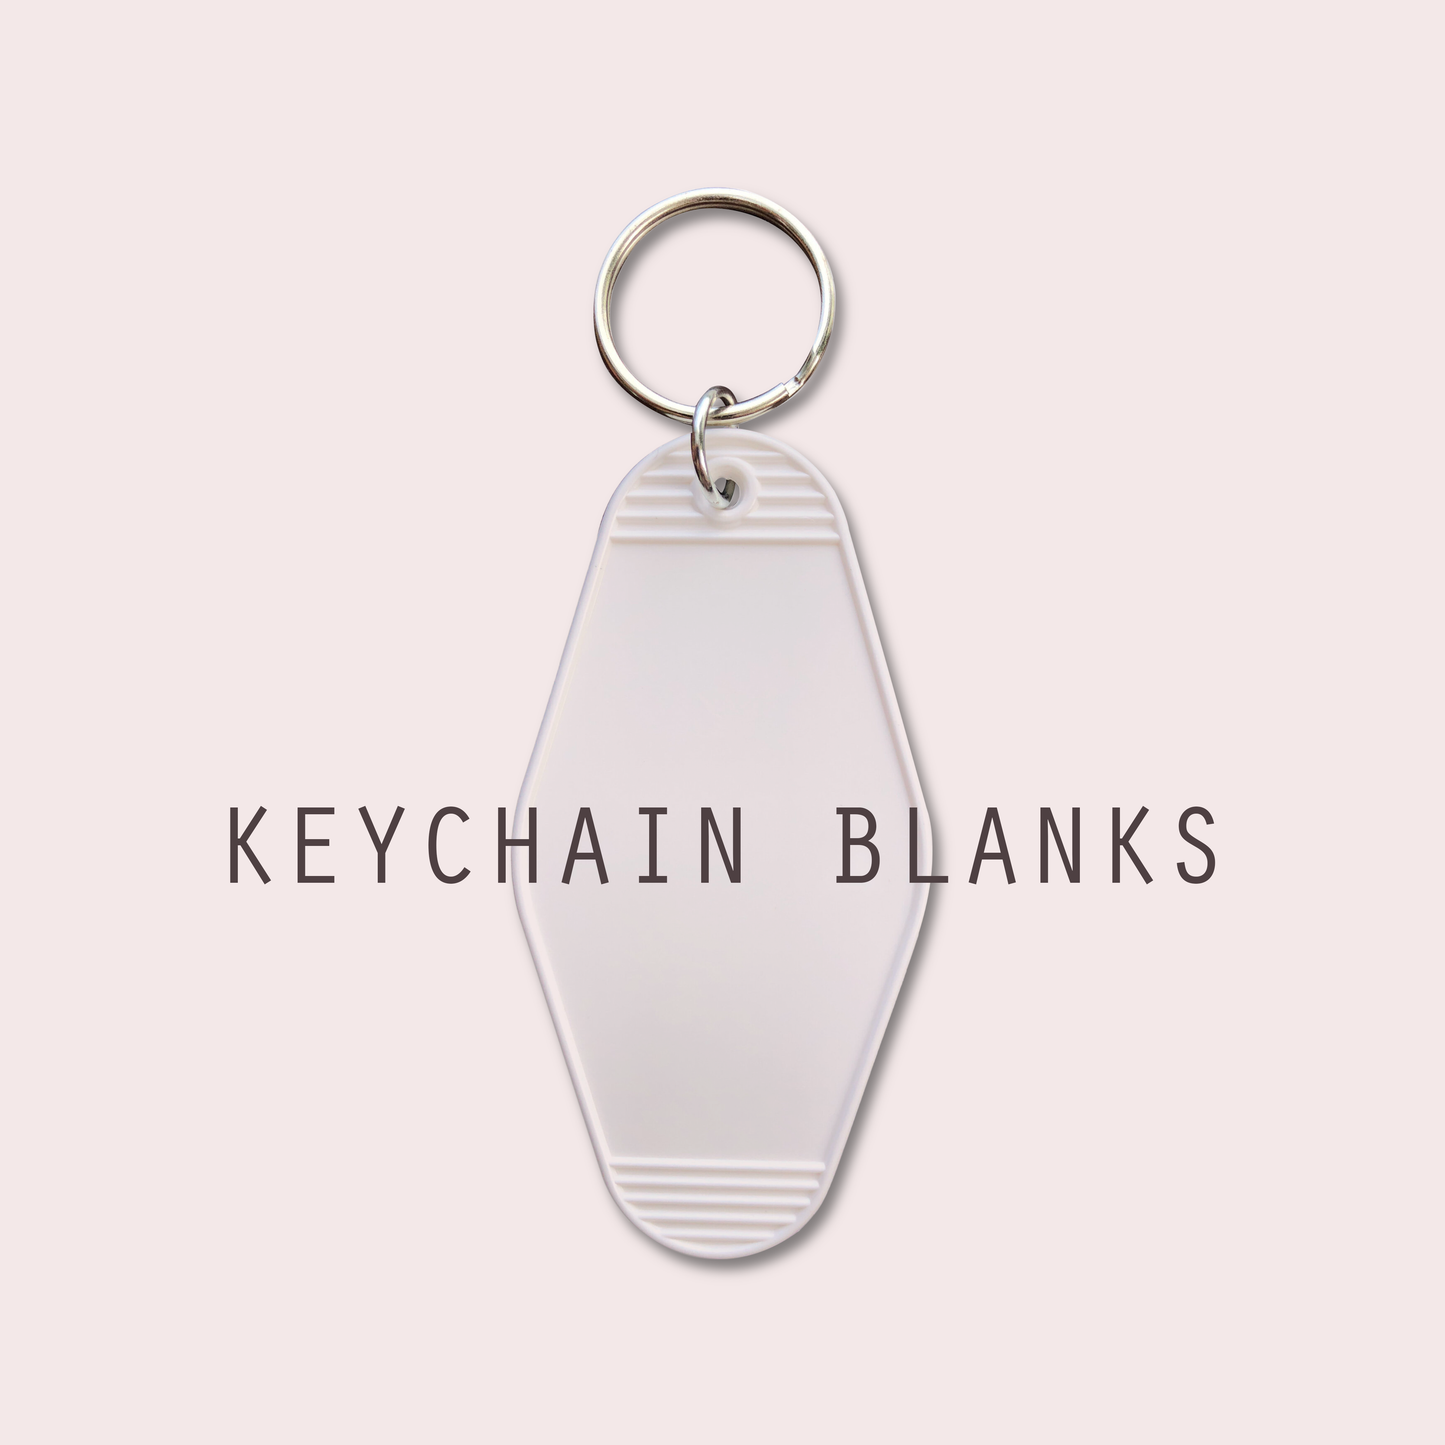 Keychain Blanks